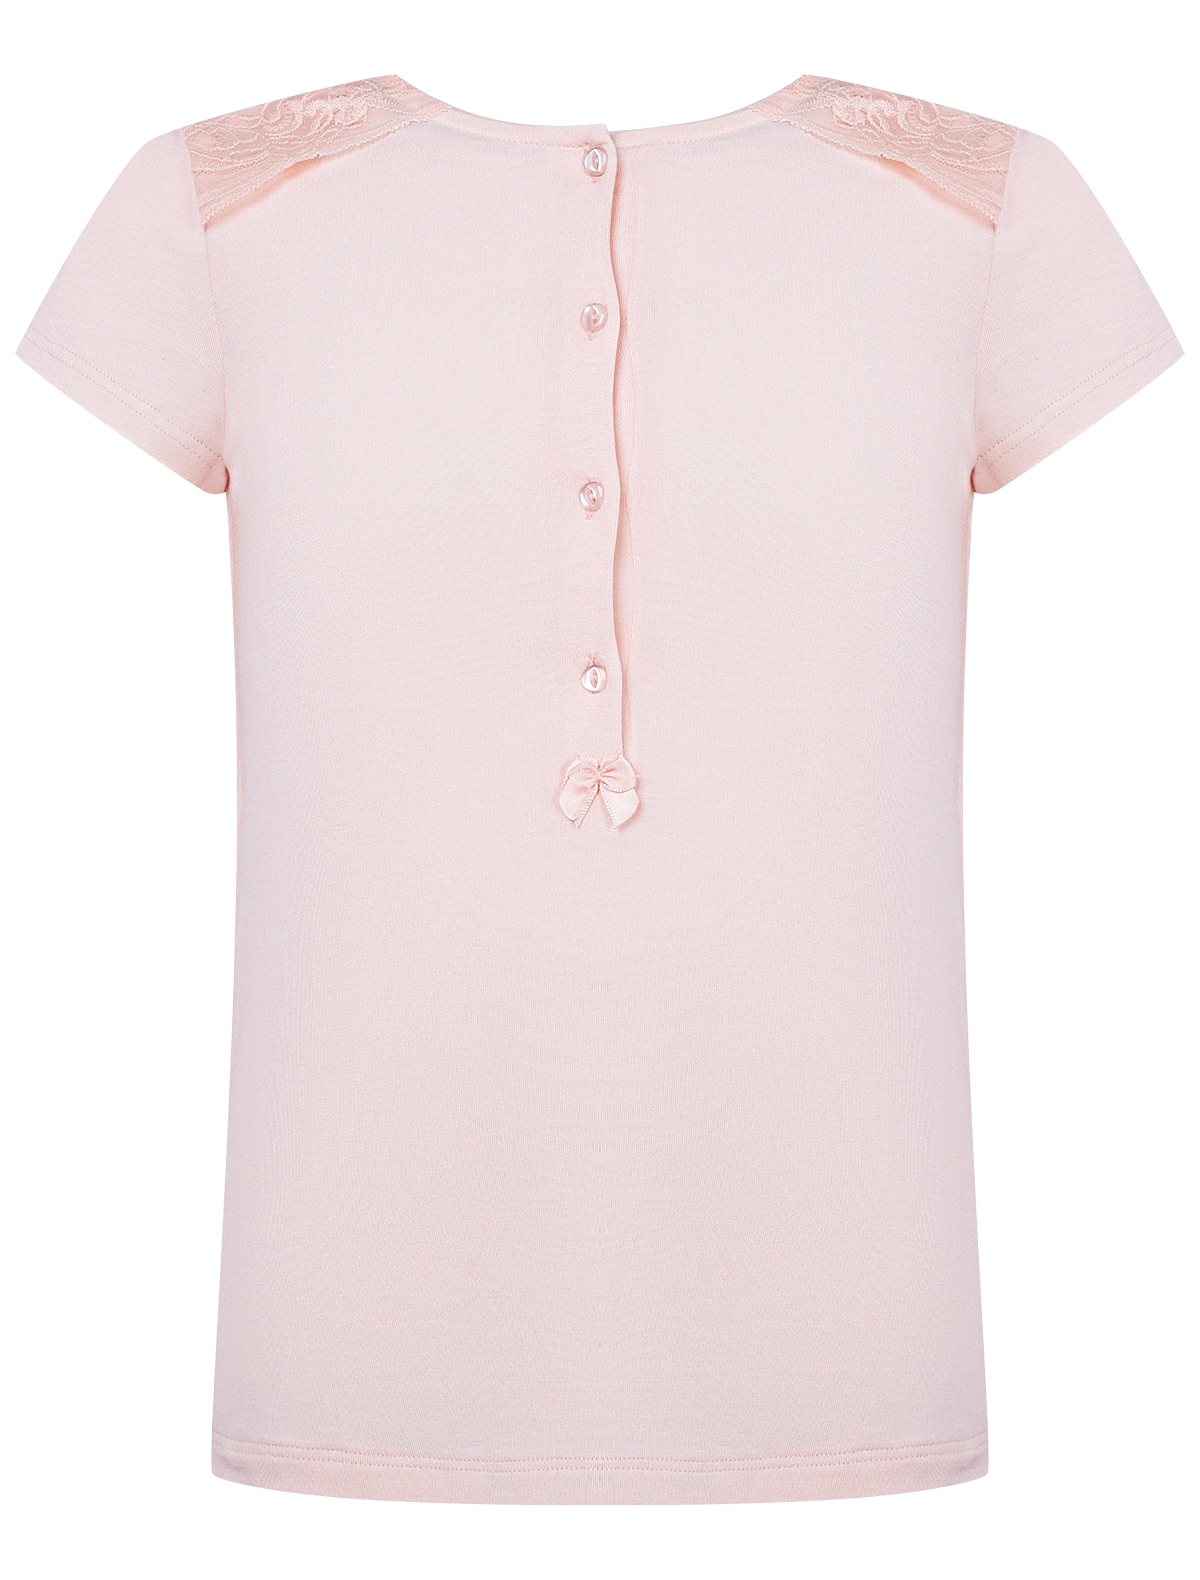 Пижама Sognatori 2196102, цвет розовый, размер 7 0214509070475 - фото 3